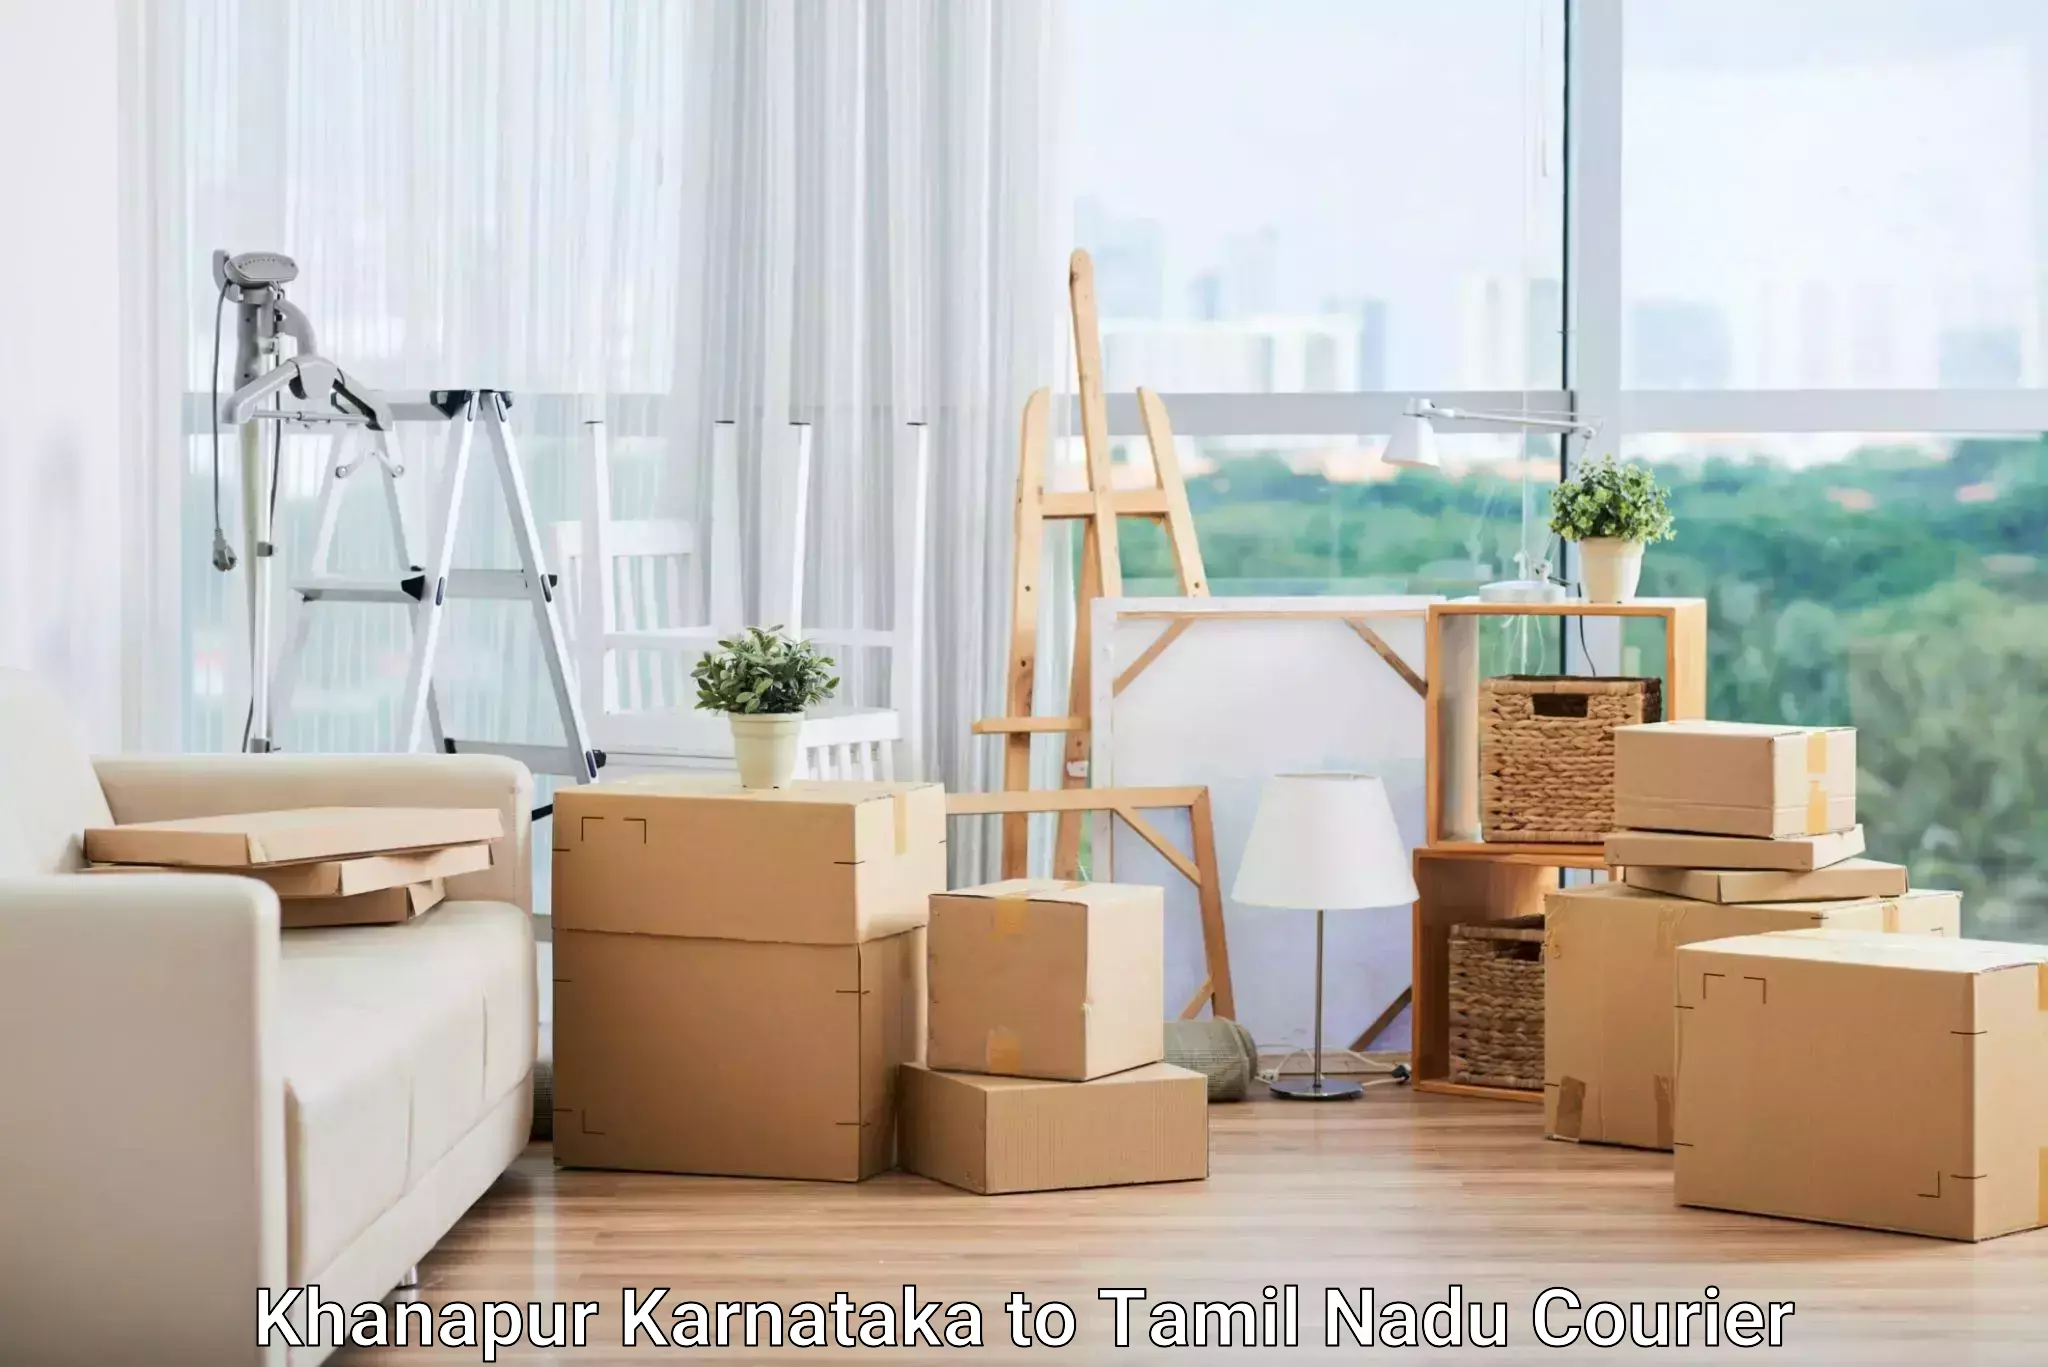 Advanced shipping technology Khanapur Karnataka to Srirangam